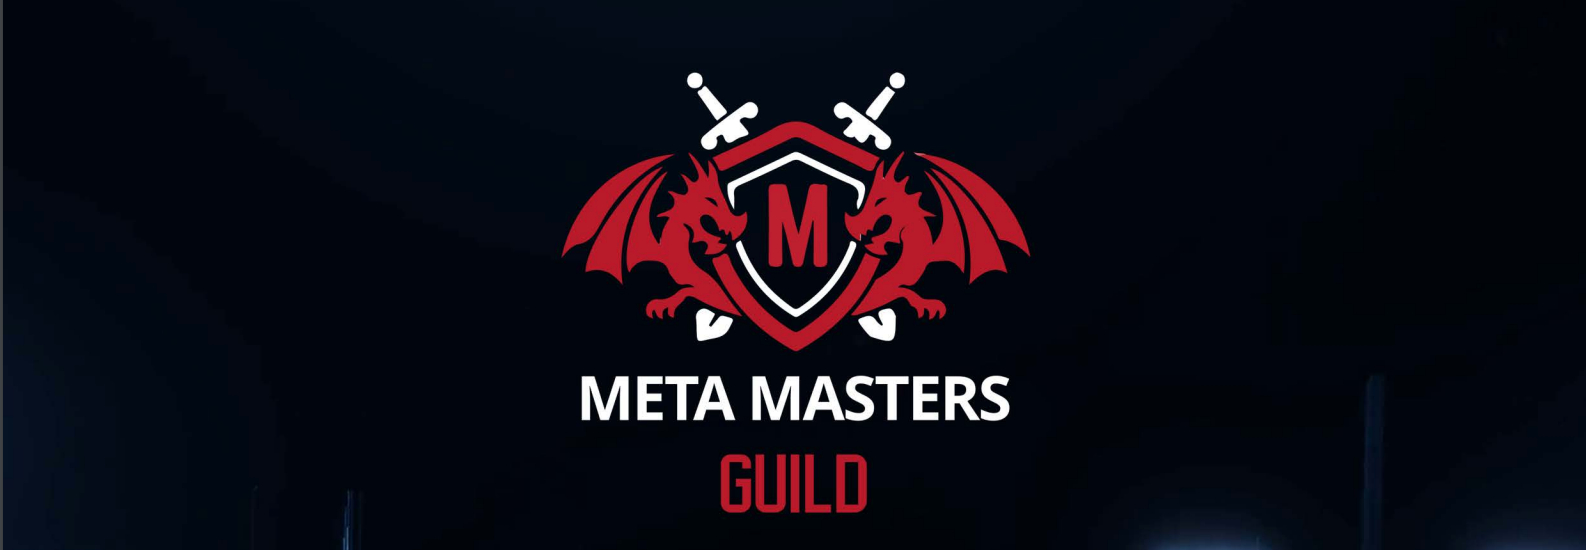 Criptovalute in crescita: Meta Masters Guild